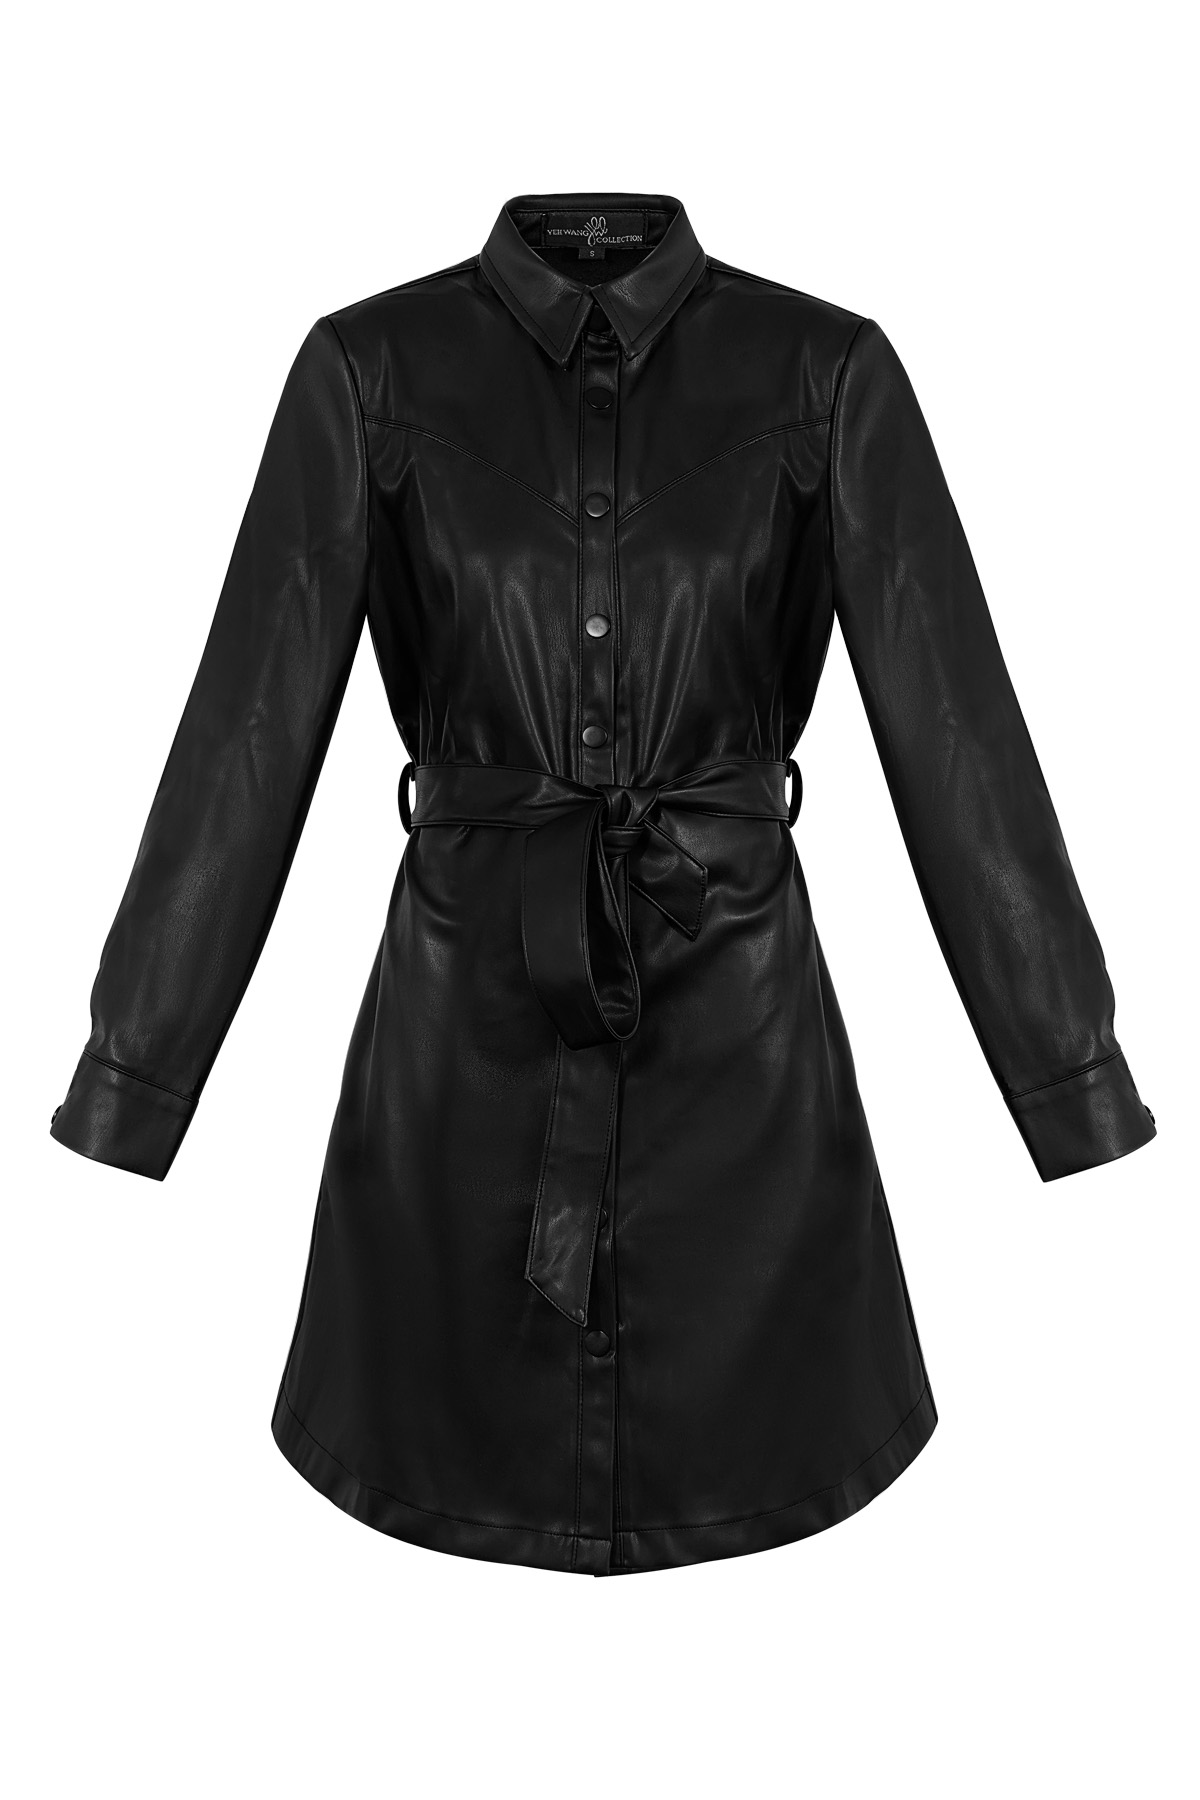 PU leather dress with belt - black